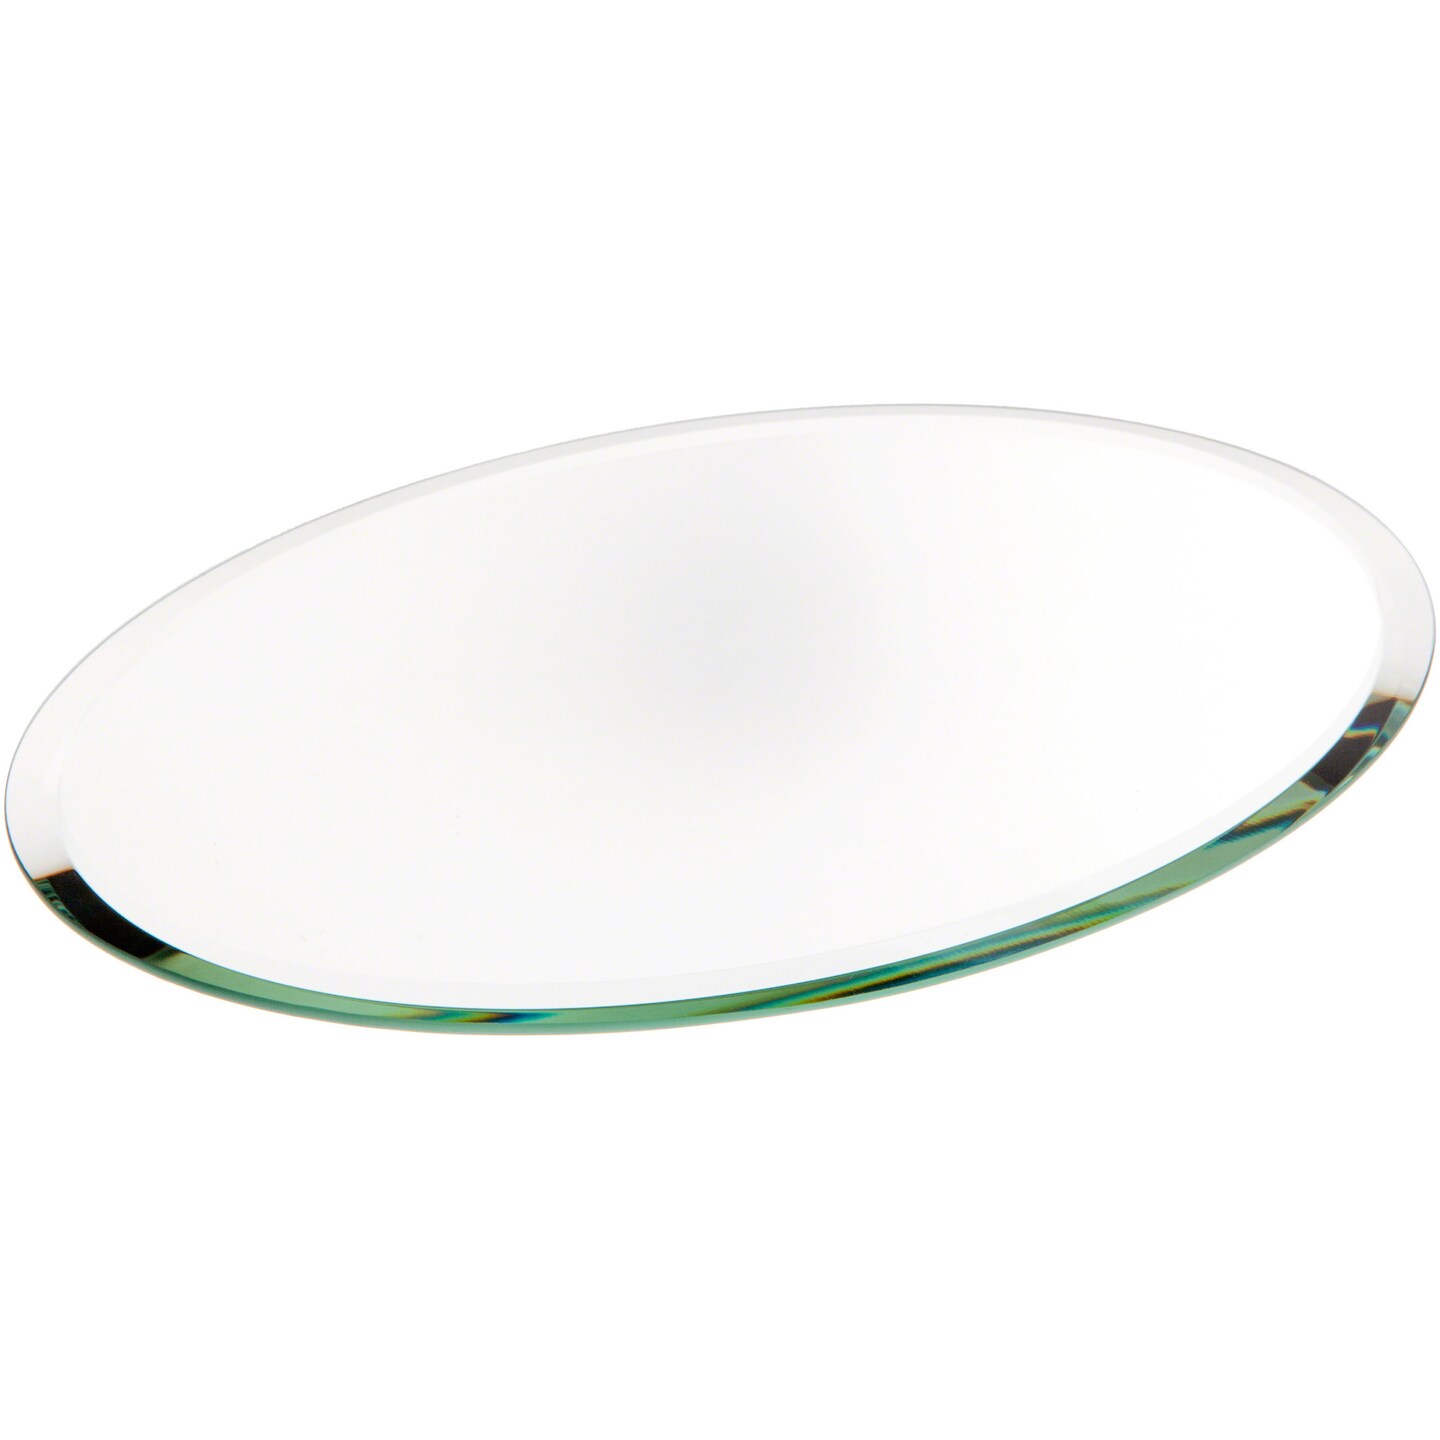 Plymor Oval 3mm Beveled Glass Mirror, 5 inch x 7 inch